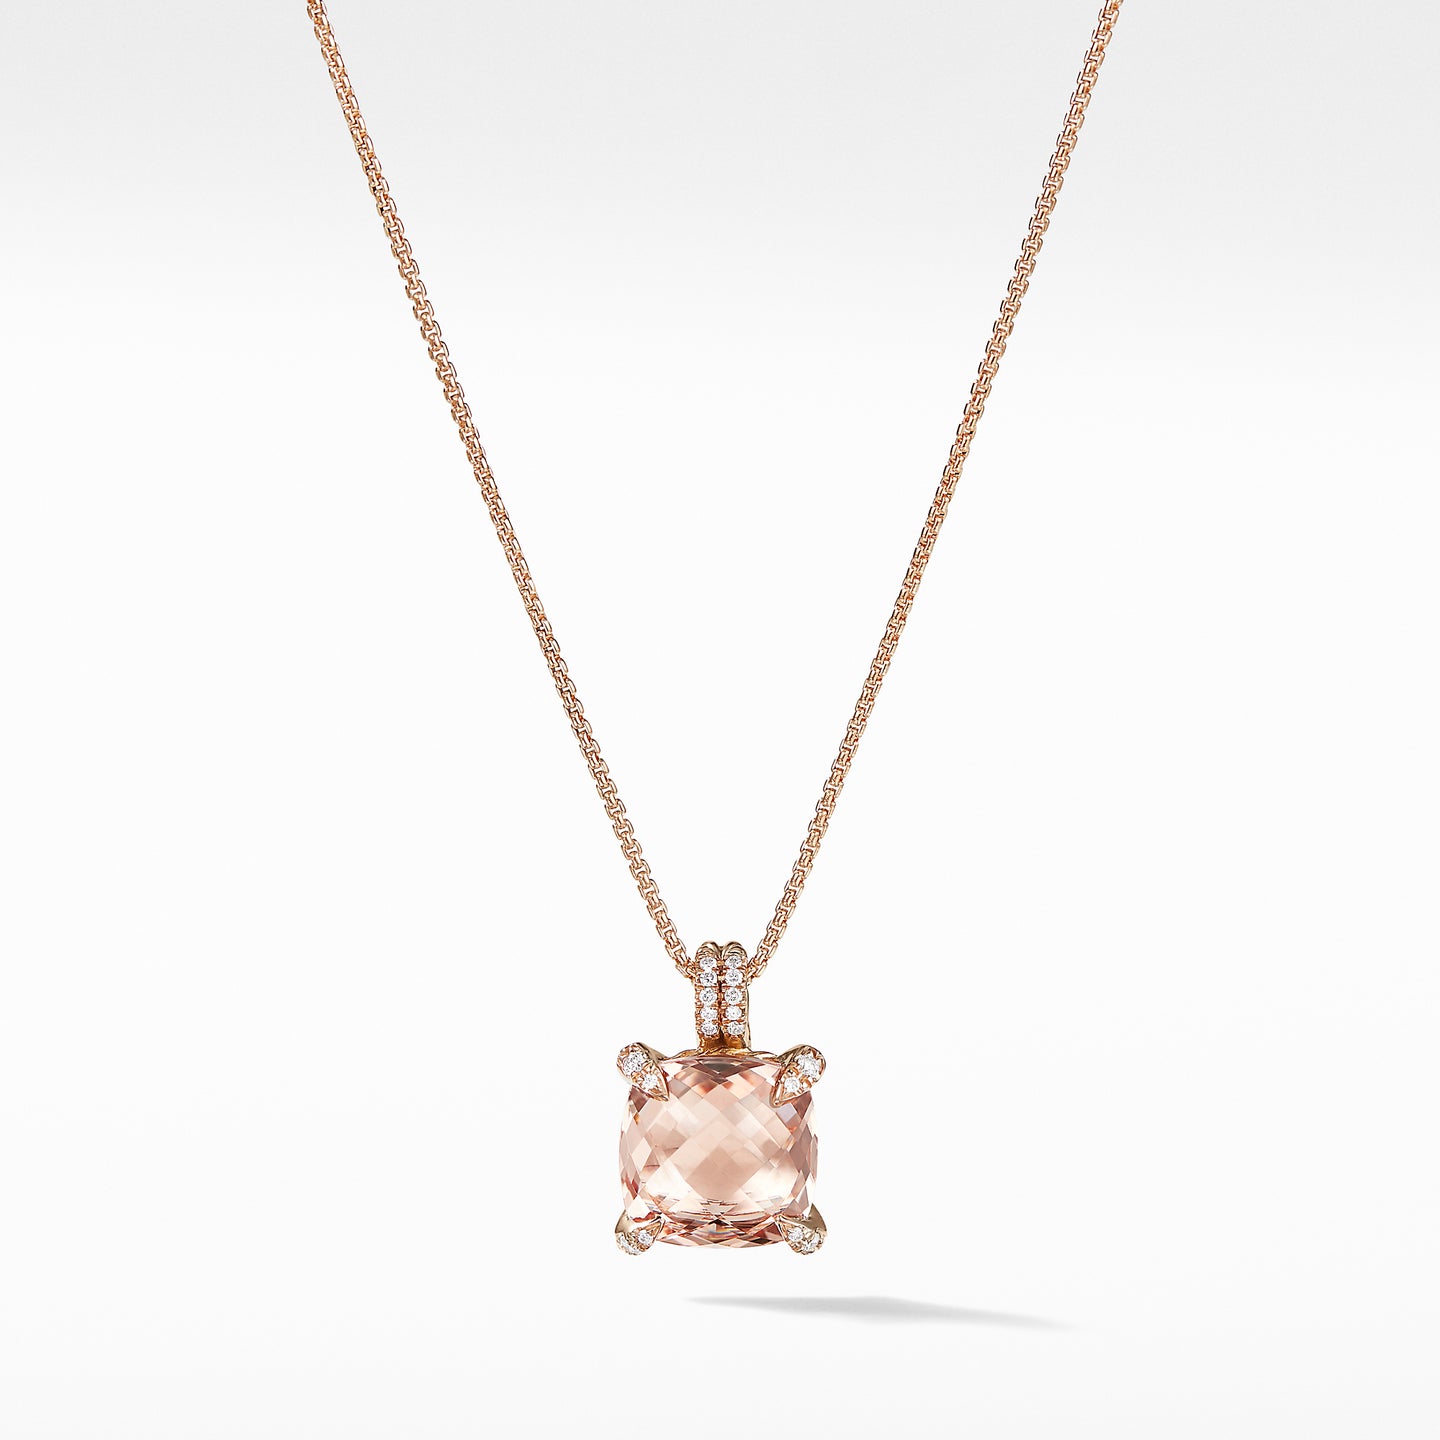 18K Rose Gold David Yurman Pendant Necklace with Morganite and Diamonds